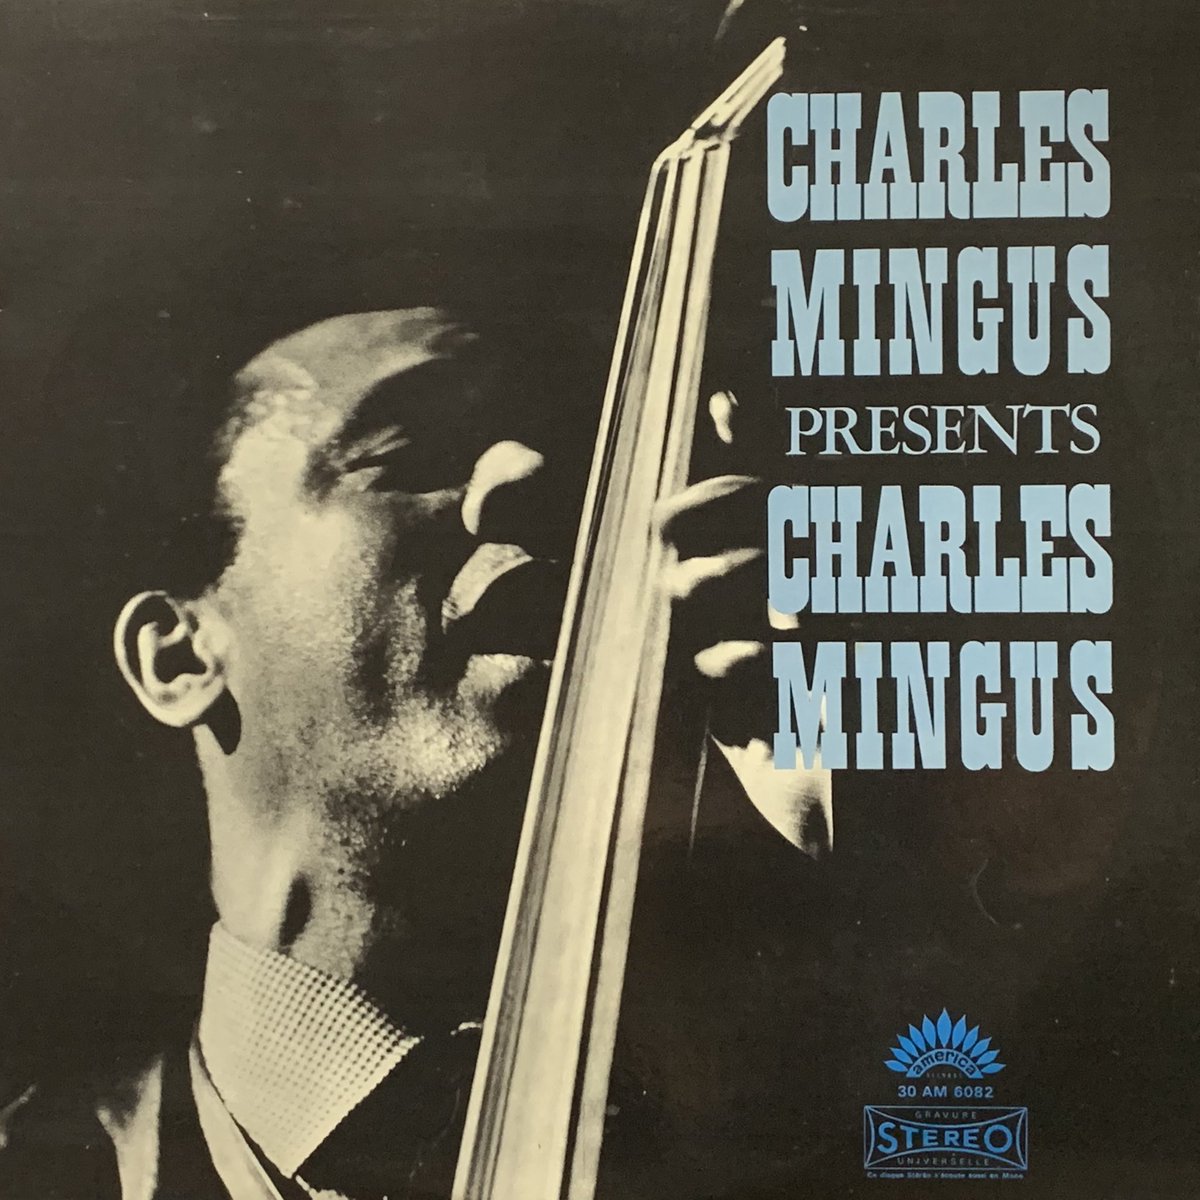 CHARLES MINGUS PRESENTS CHARLES MINGUS Recorded October 20, 1960